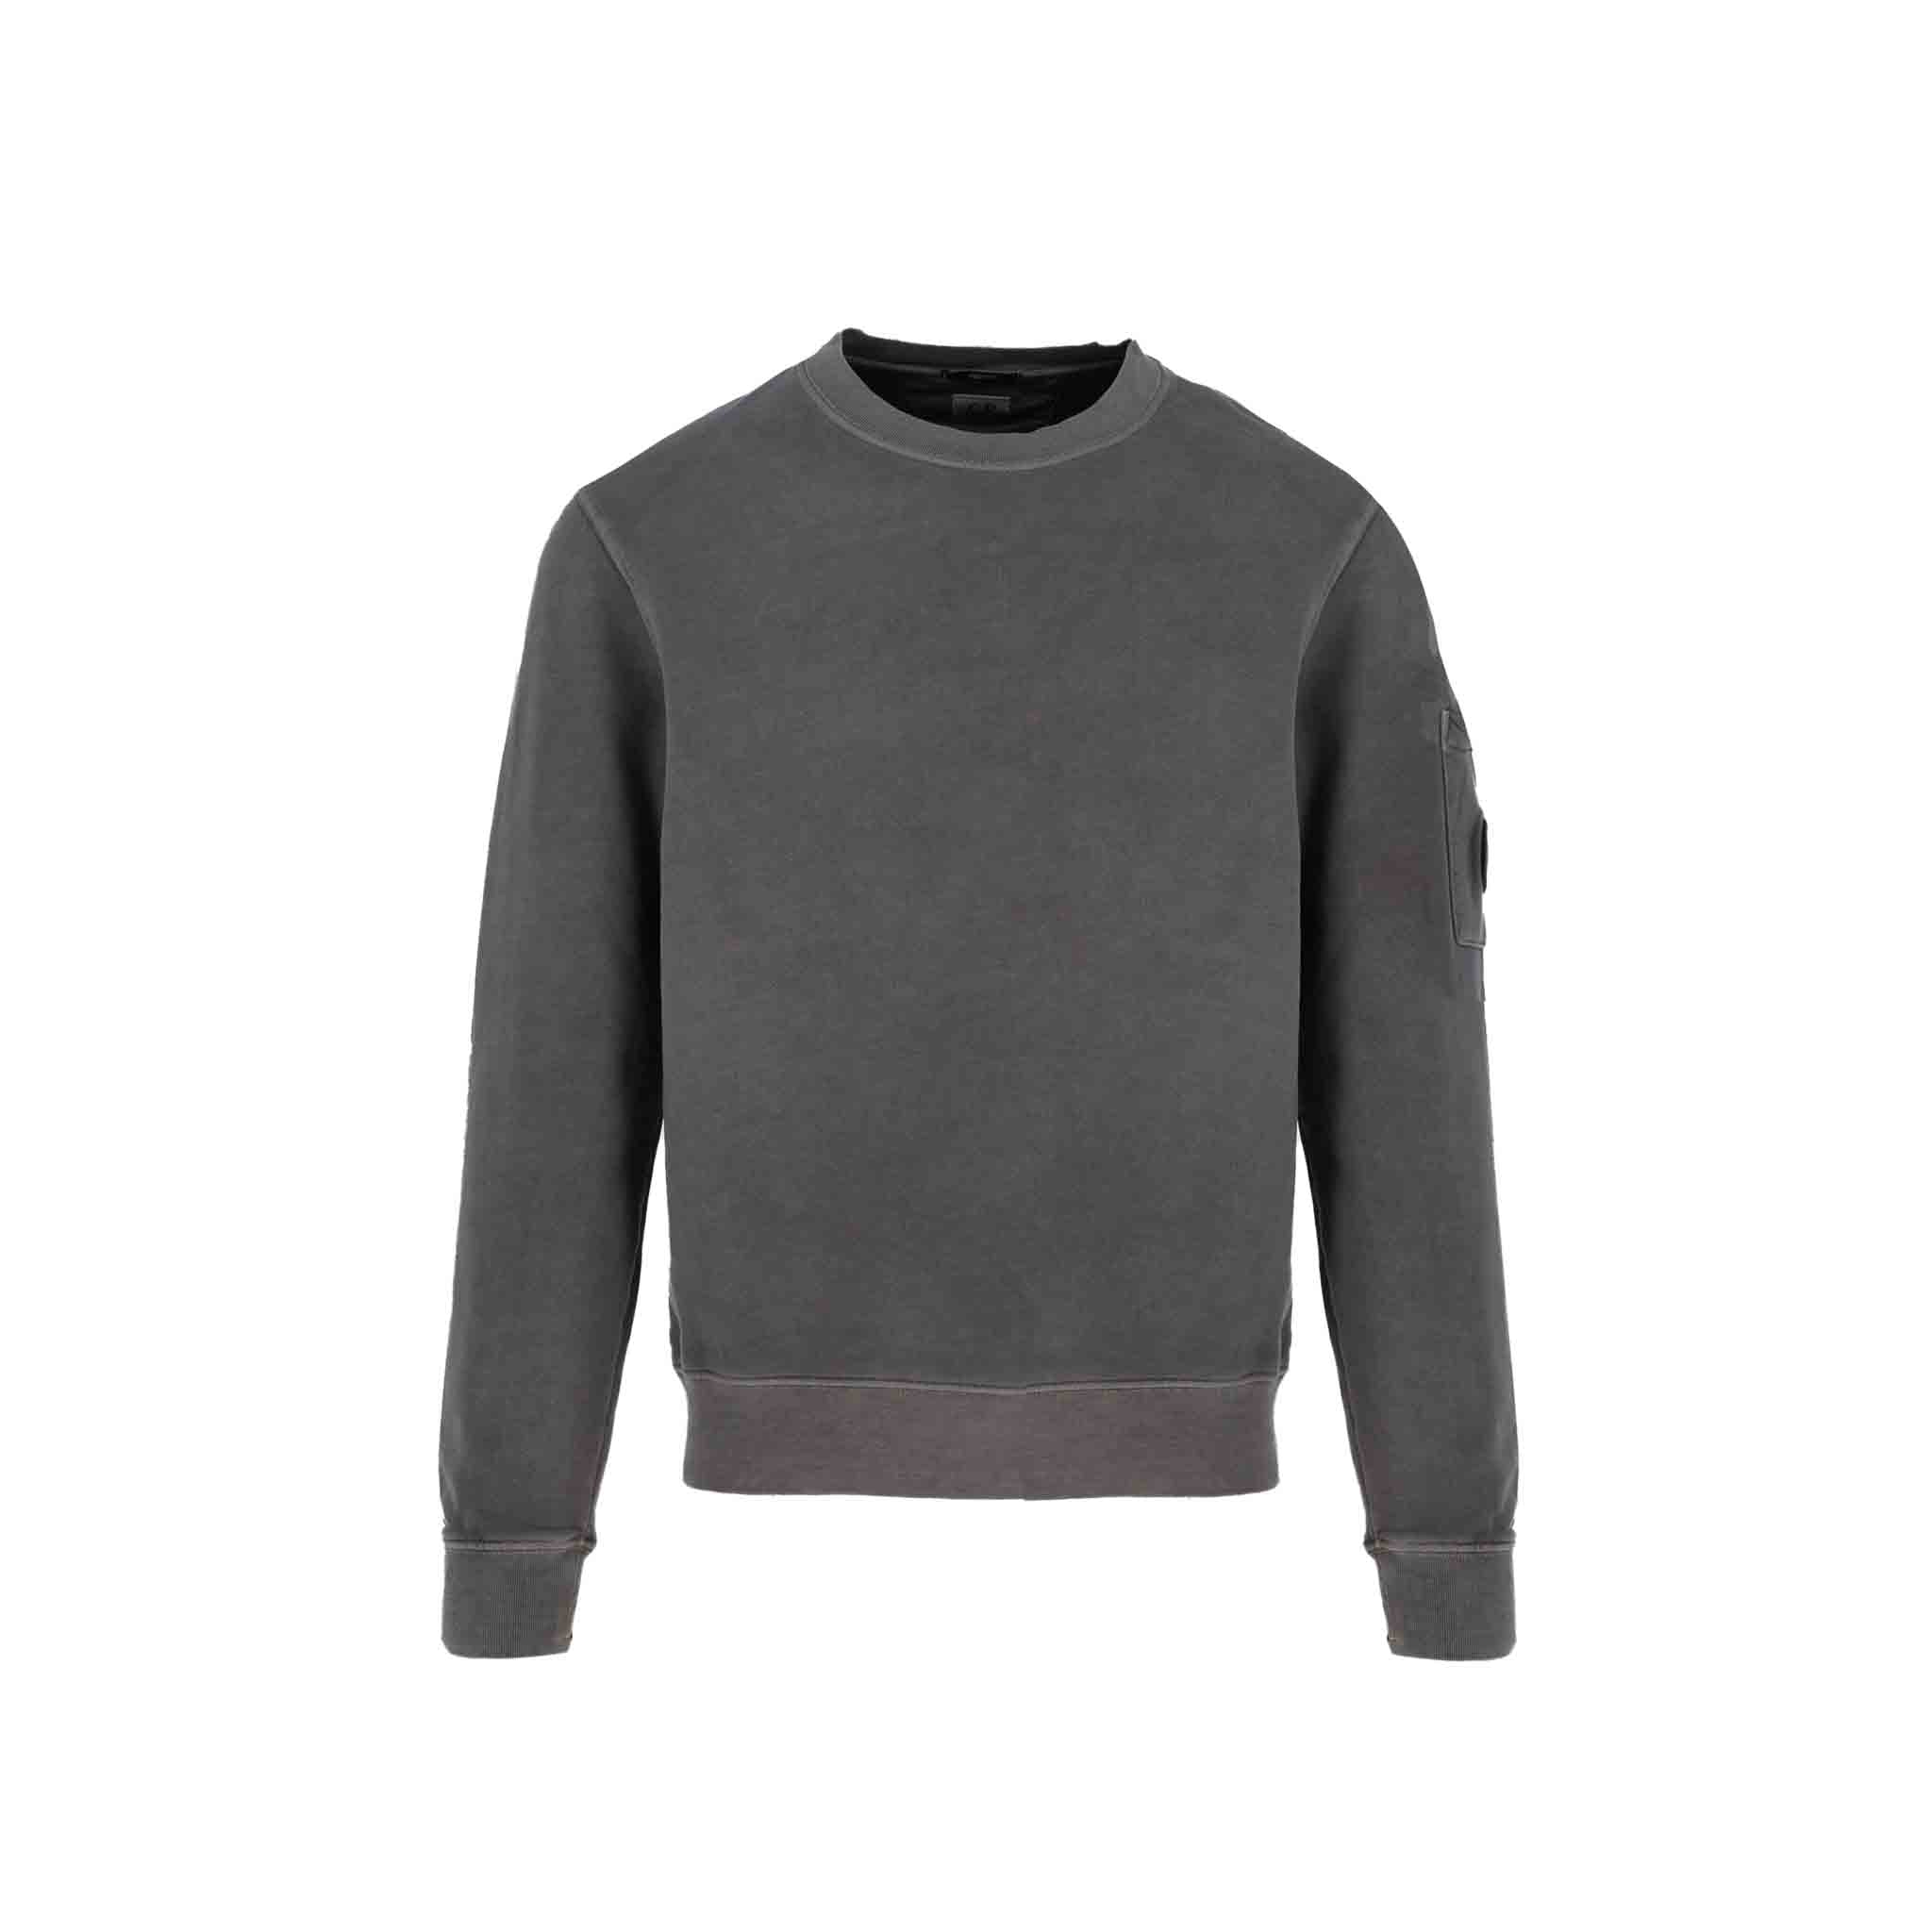 C.P. Company Resist Dyed Sweatshirt in Steel Grey